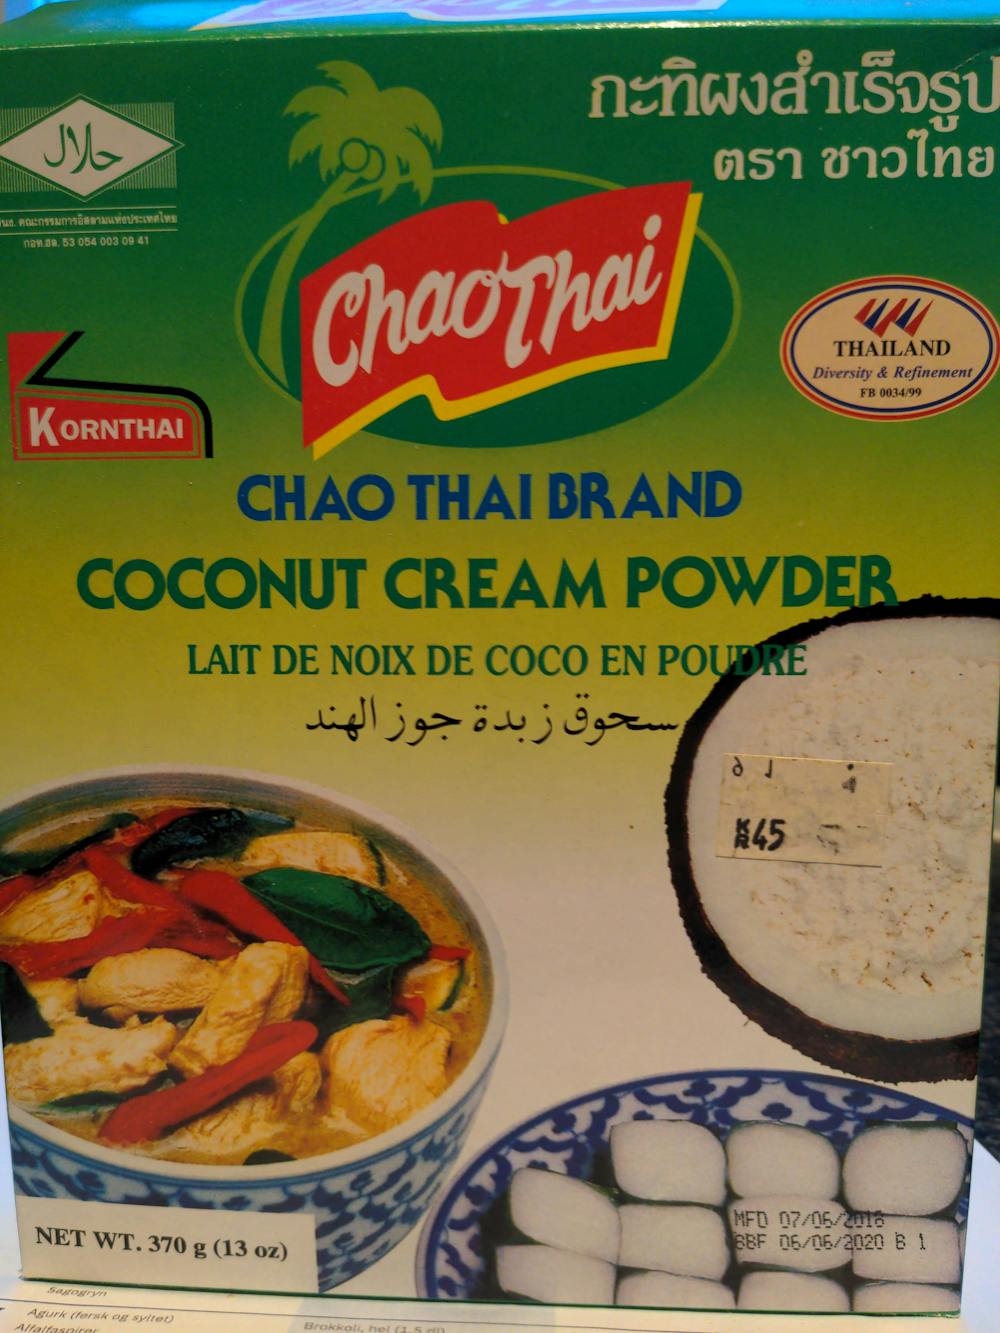 Coconut cream powder, Chao Thai